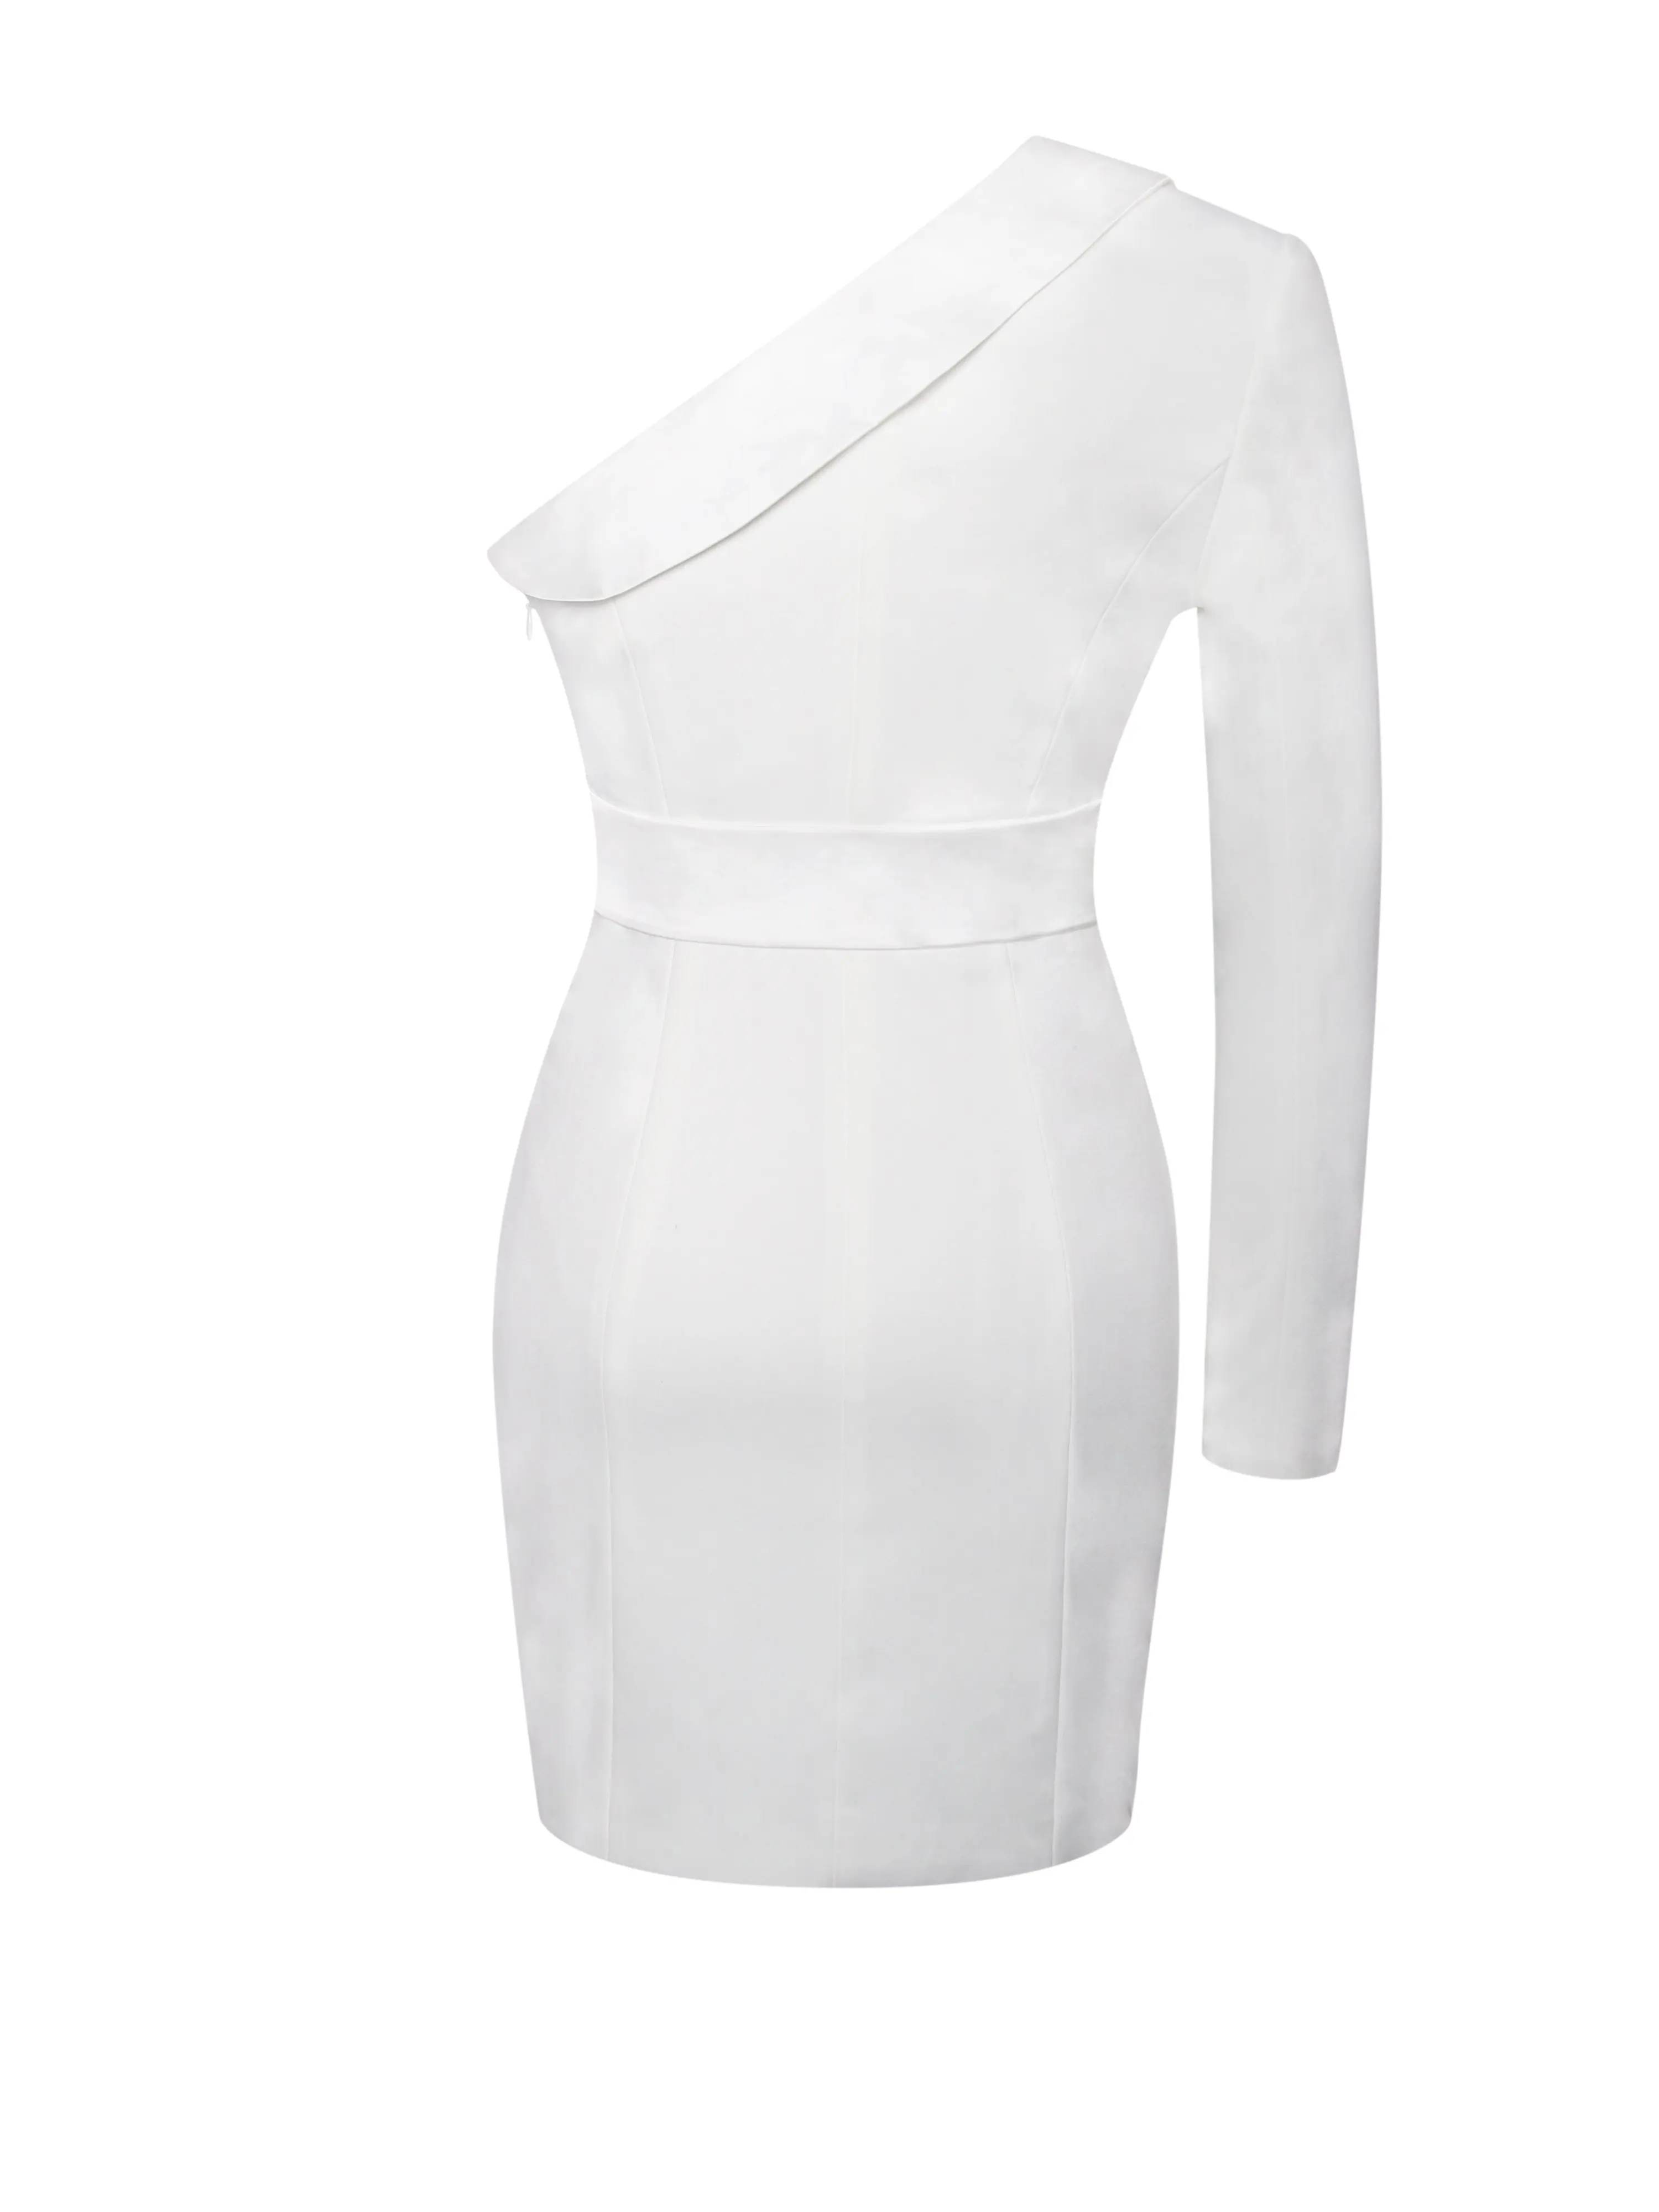 Deer Lady Blazer Dress Women 2020 White One Sleeve Party Dress Bodycon Mini Crepe Sequin Dress